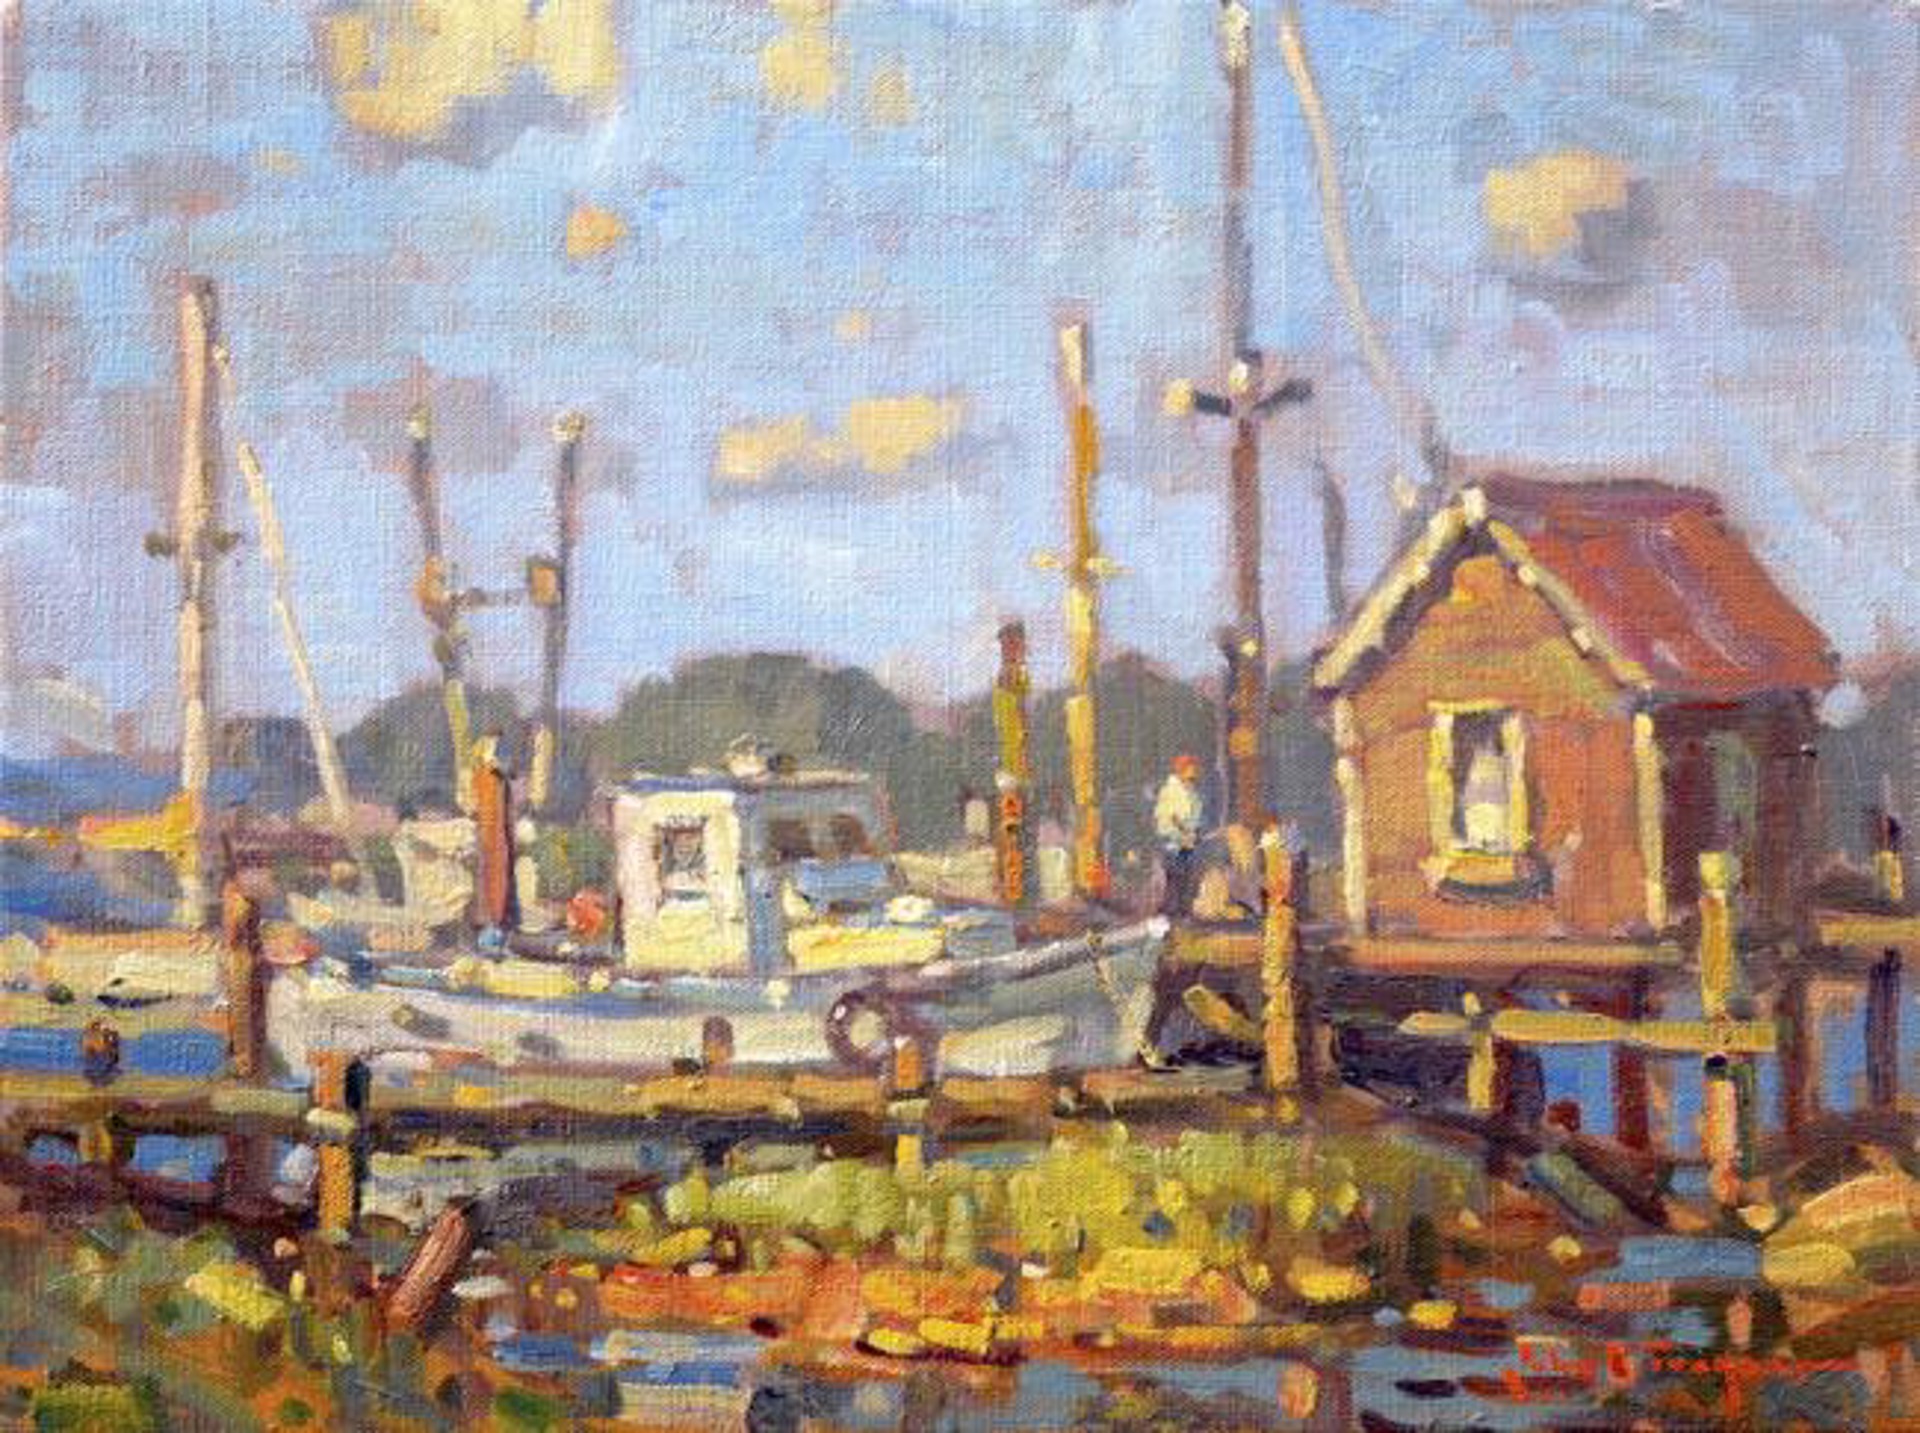 Shem Creek Docks by John C. Traynor